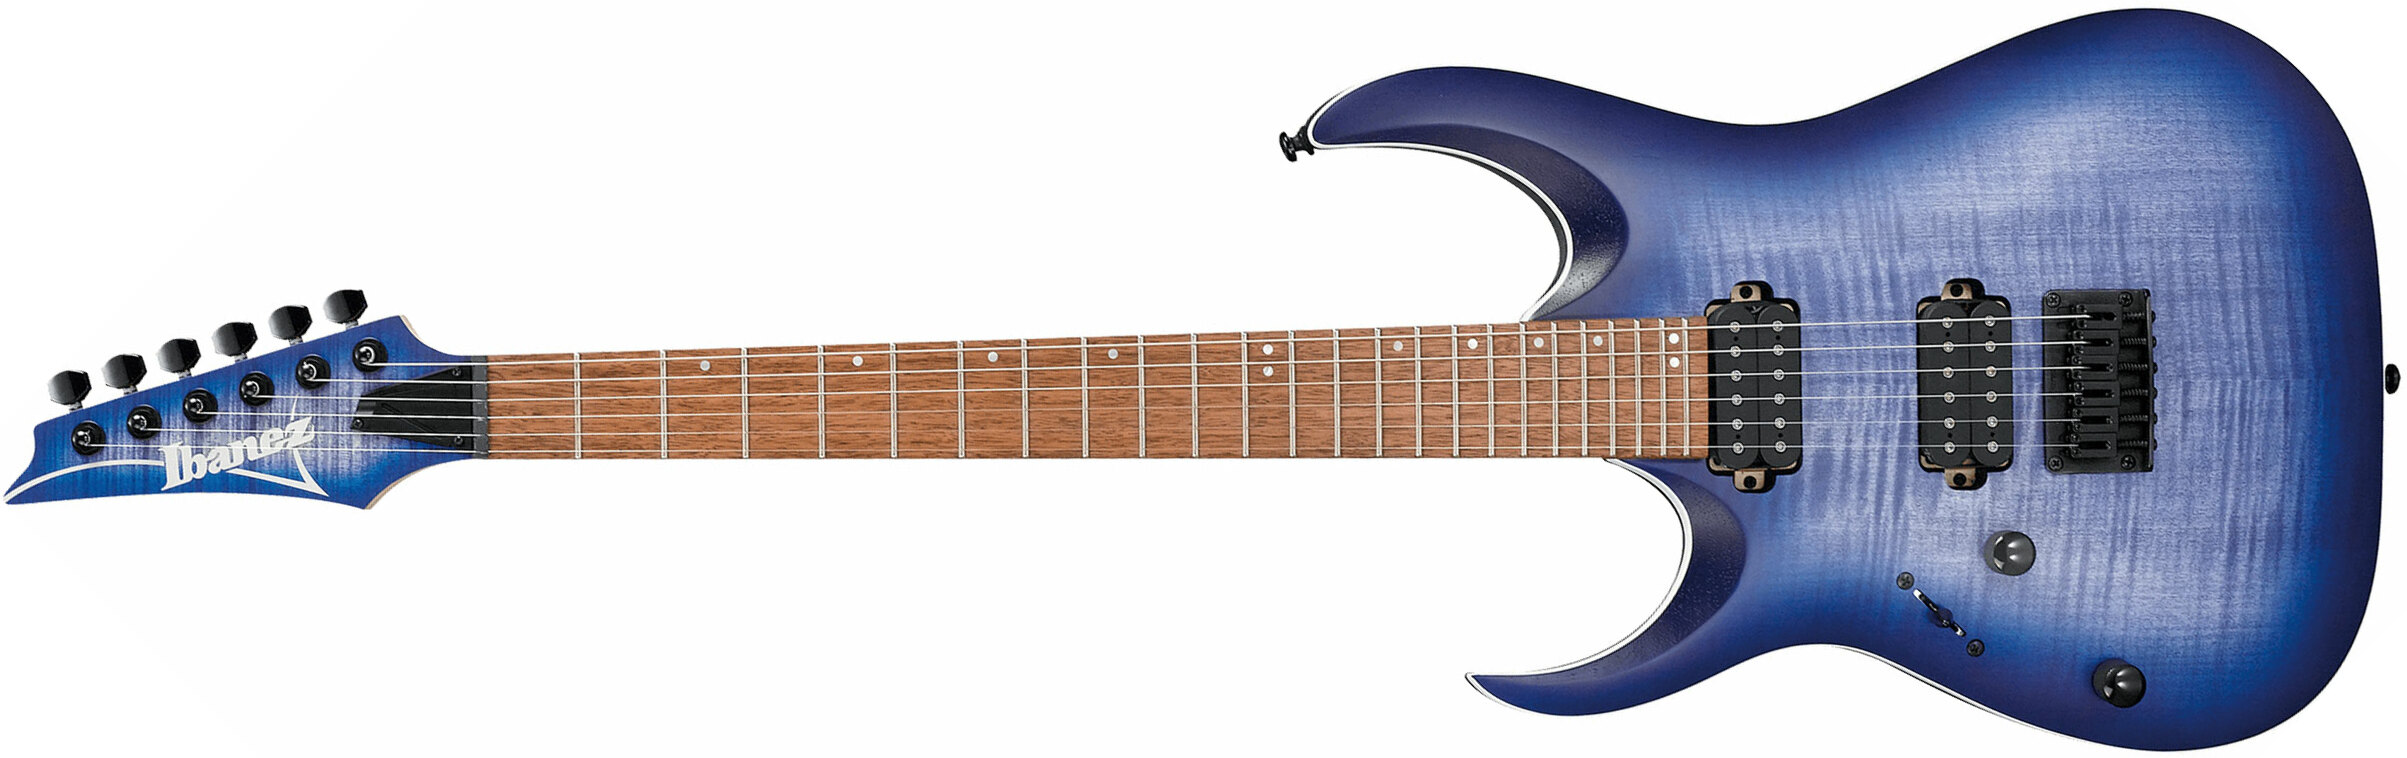 Ibanez Rga42fml Blf Gaucher Standard Hh Ht Rw - Blue Lagoon Burst Flat - E-Gitarre in Str-Form - Main picture